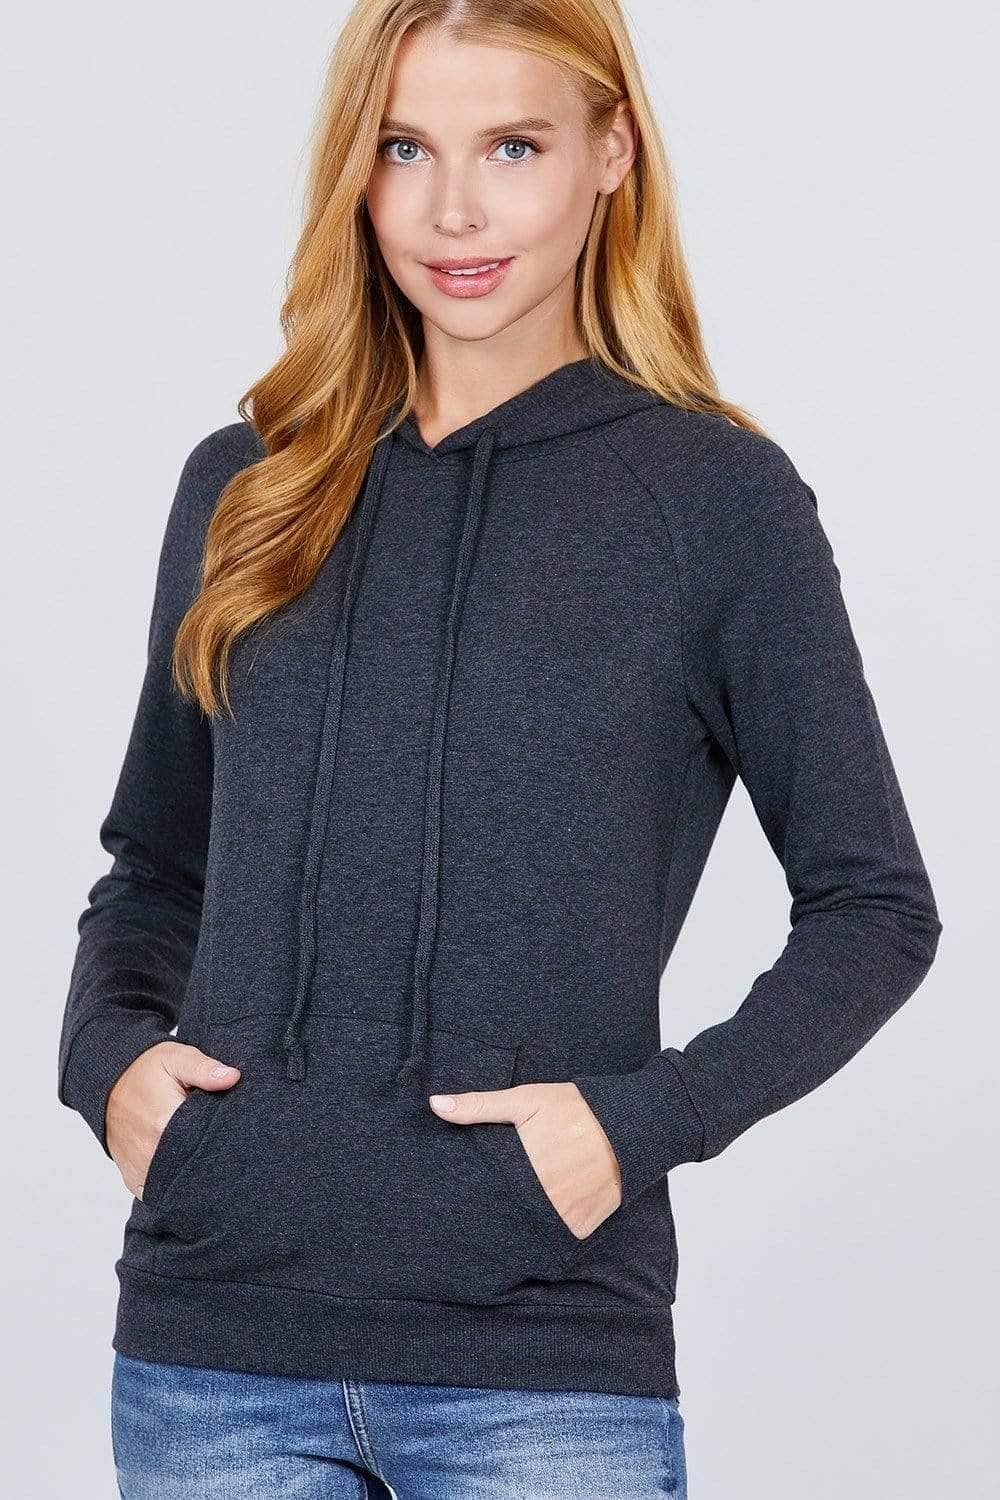 Charcoal Gray French Terry Long Sleeve Sweatshirt - Shopping Therapy, LLC Sweatshirt